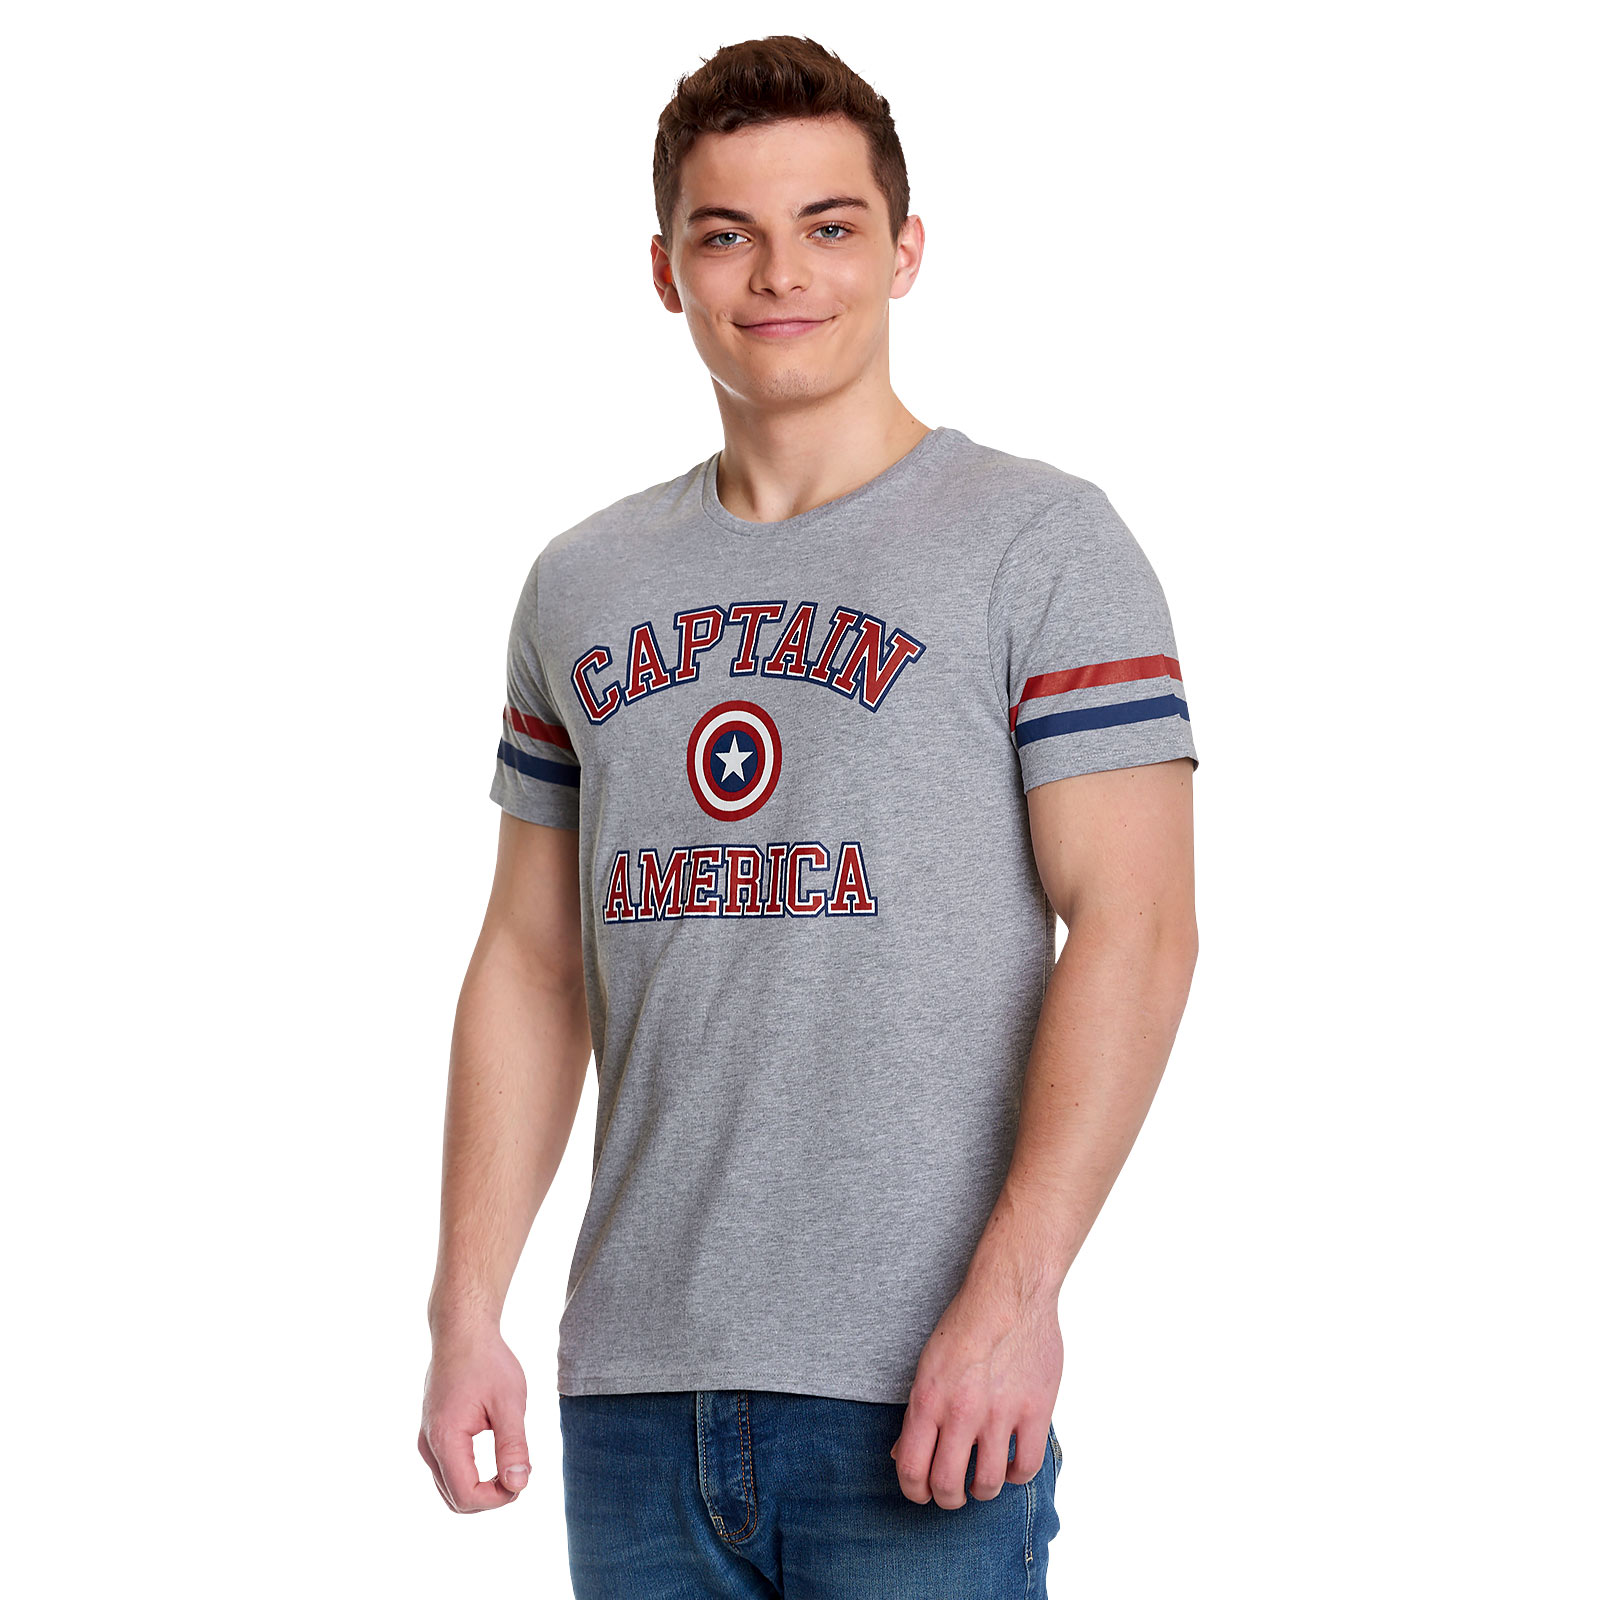 Captain America - College T-Shirt grau